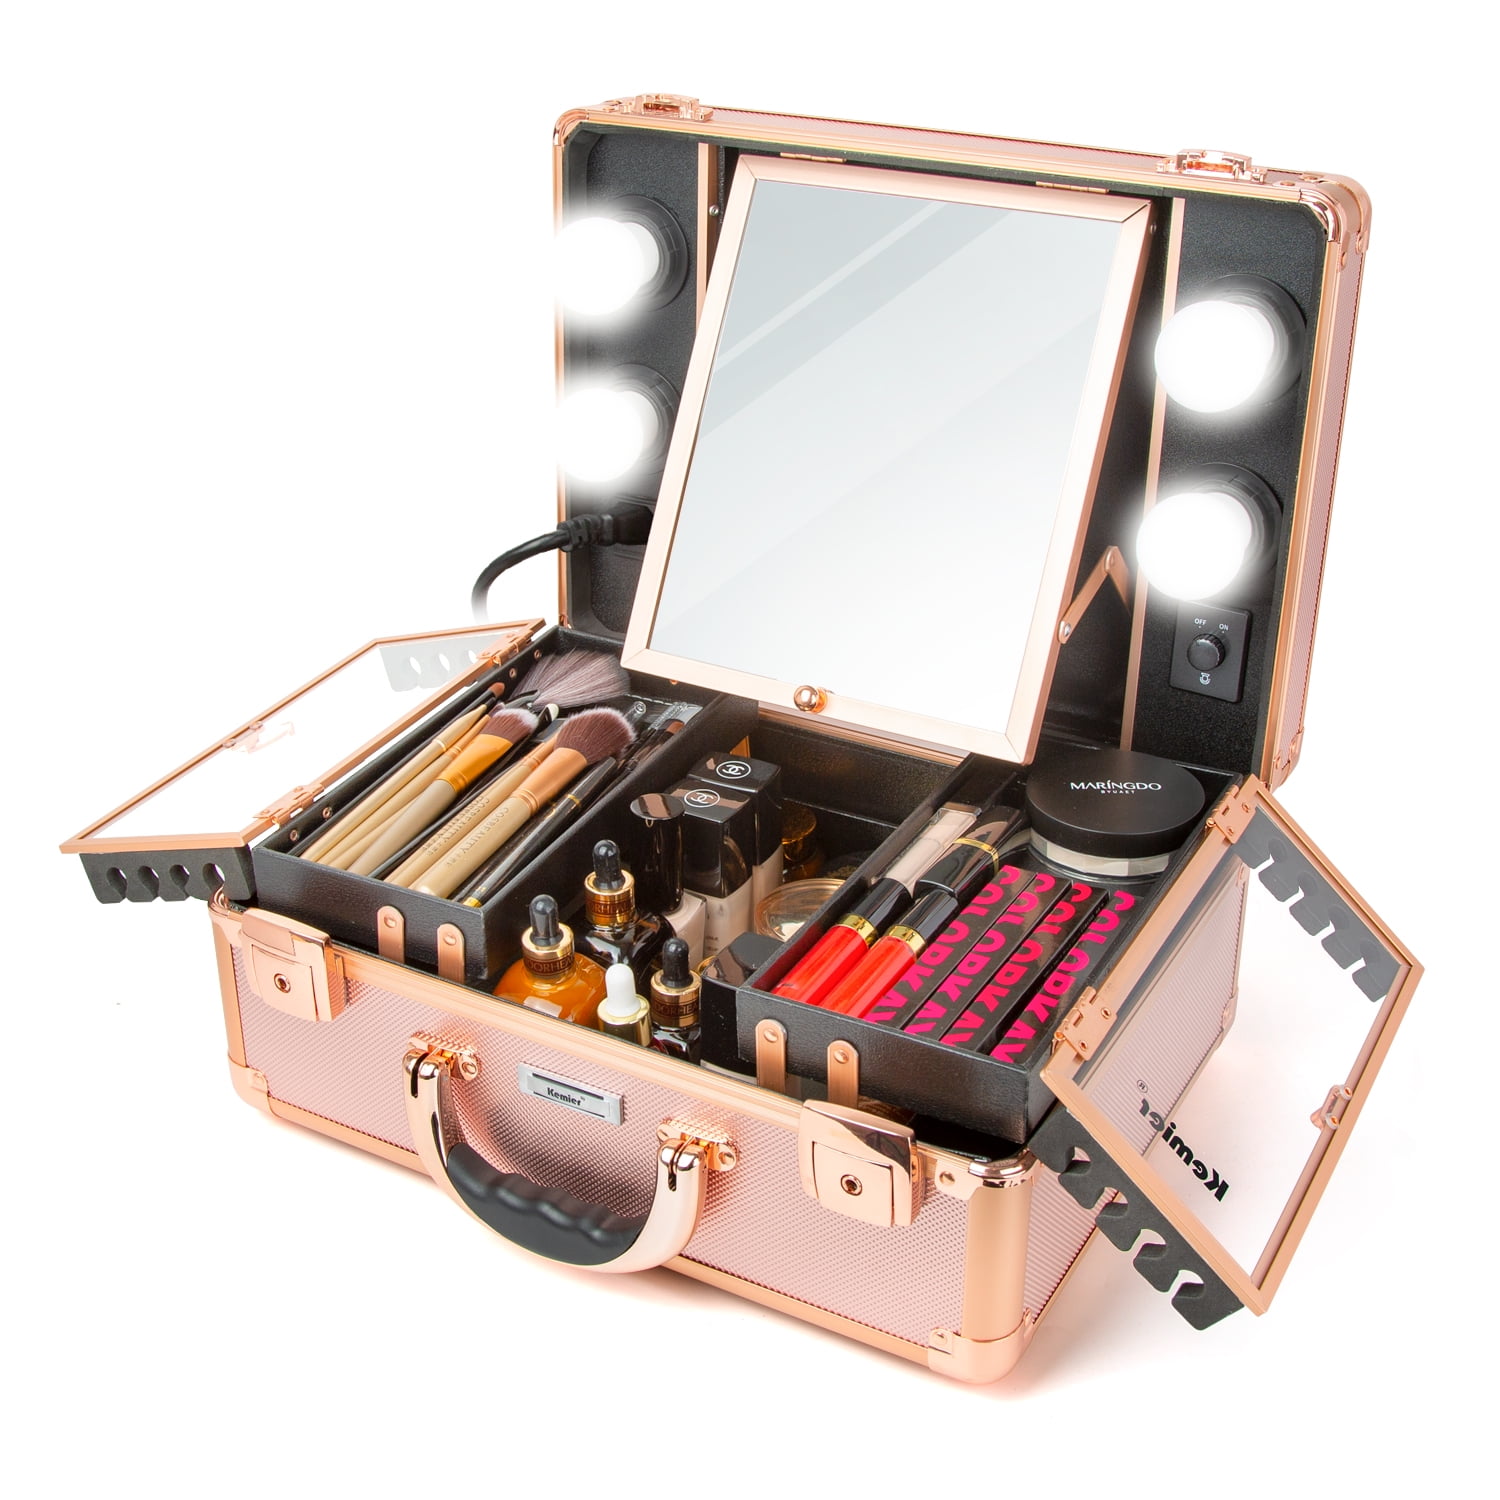 Kemier Makeup Train - Cosmetic Organizer Box Makeup Case with Lights and Mirror / Makeup Case with Customized Dividers / Large Makeup Artist Kit (Rose Gold) - Walmart.com